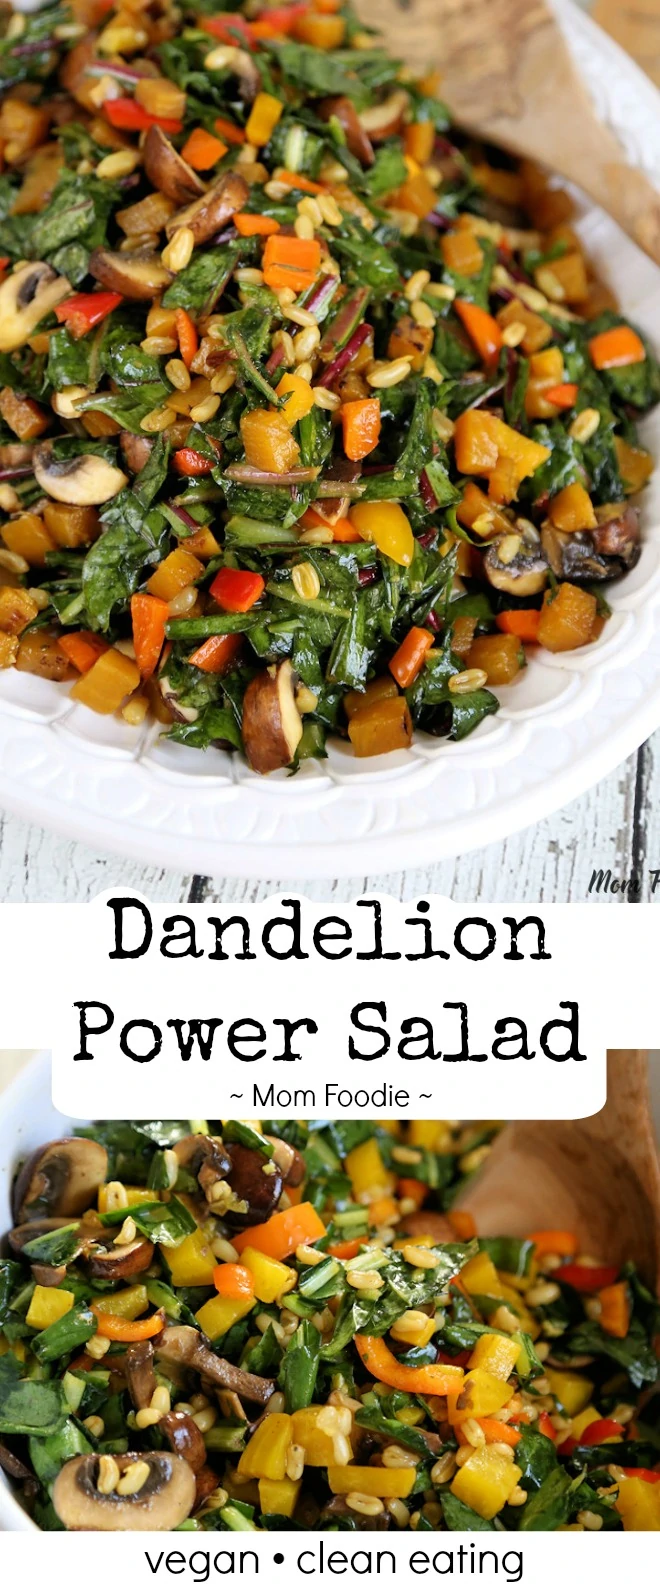 Dandelion Greens salad recipe with golden beets, kamut, mushrooms & sweet peppers - easy dandelion salad dressing